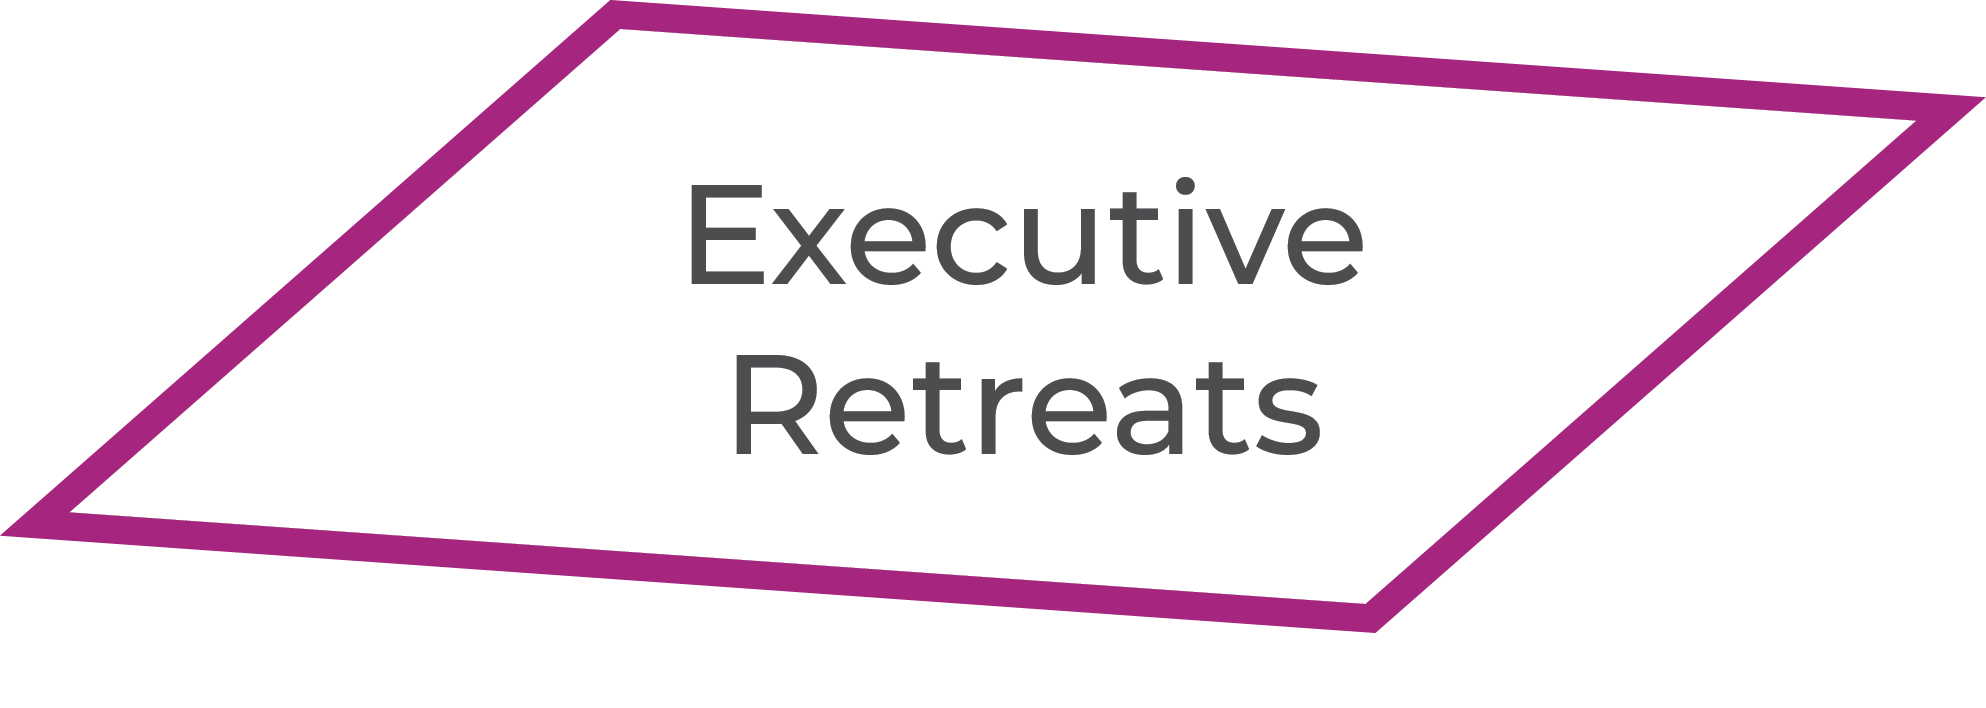 Executive Retreats